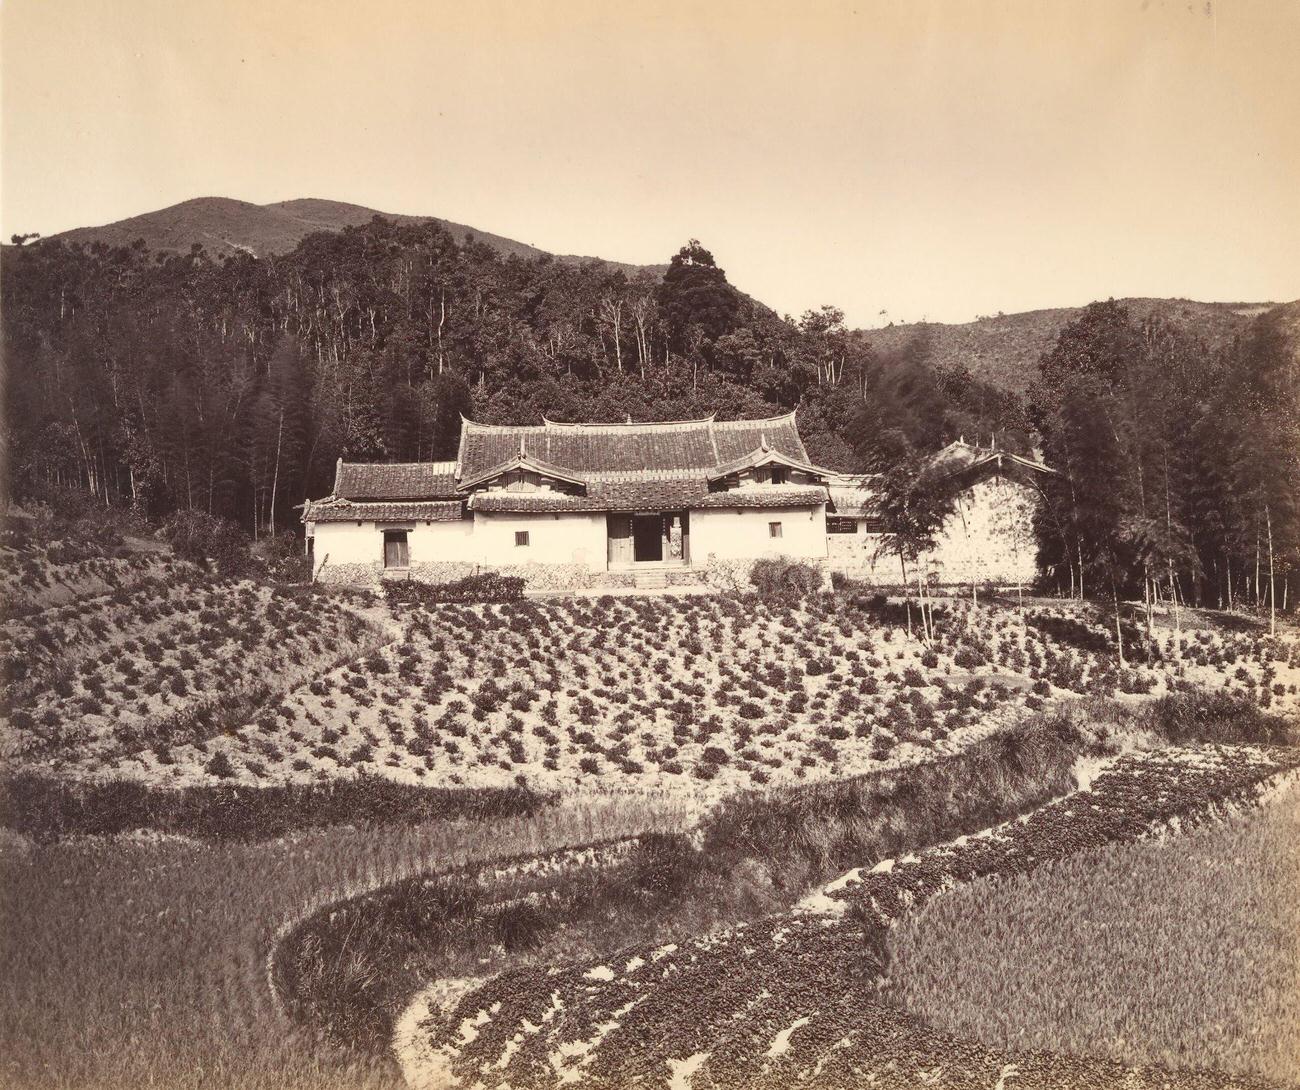 Teafield & Josshouse at Peling, 1869